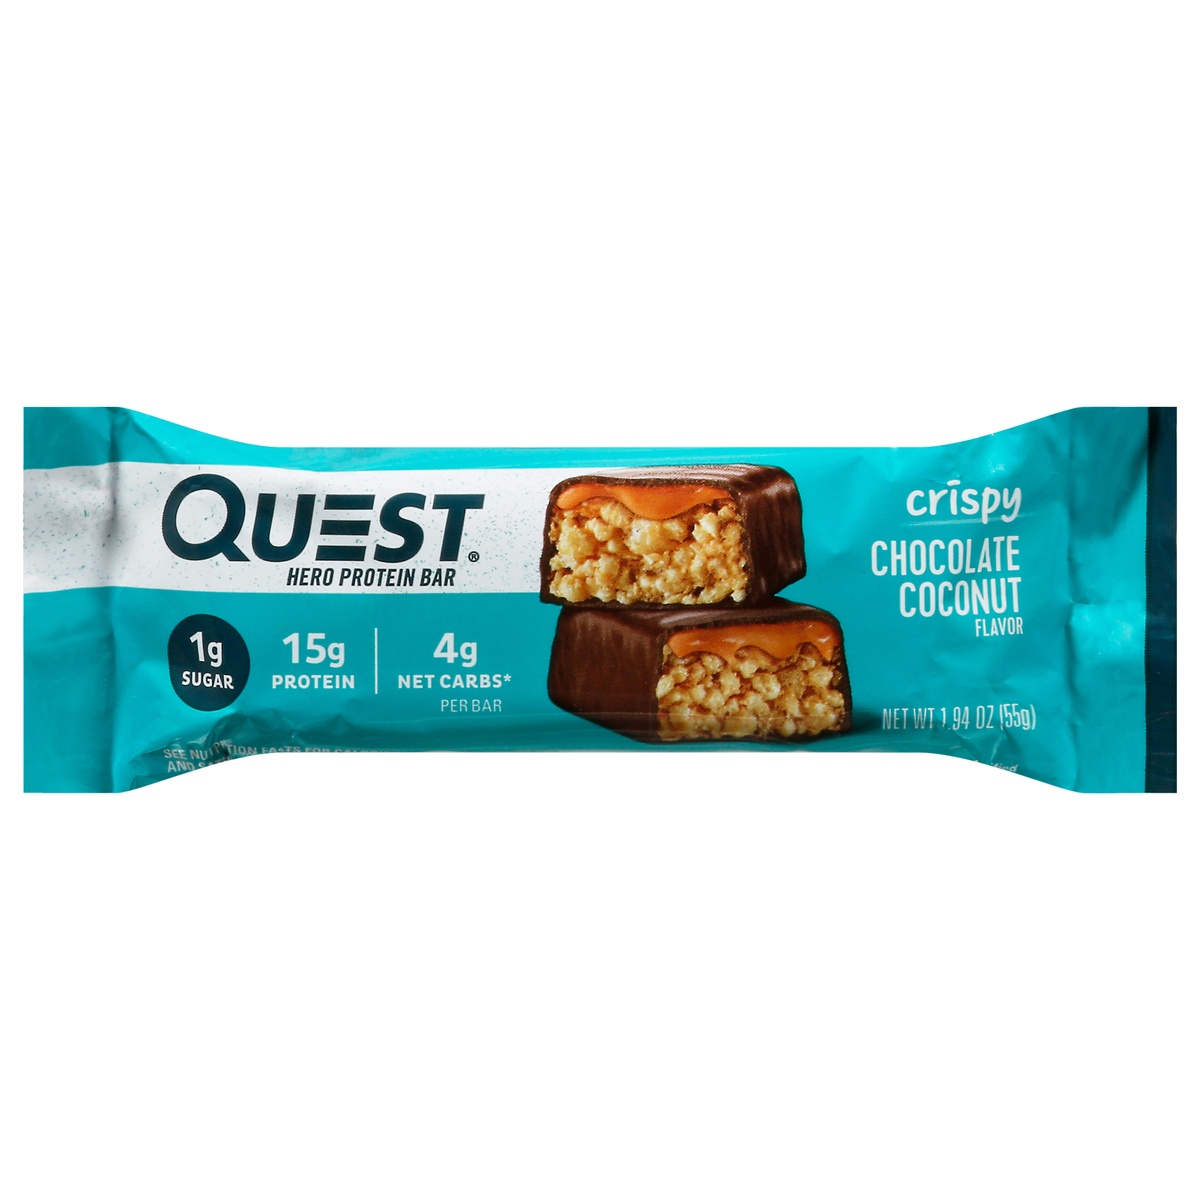 Quest Crispy Chocolate Coconut Flavor Hero Protein Bar 1.94 oz 1.94 oz ...